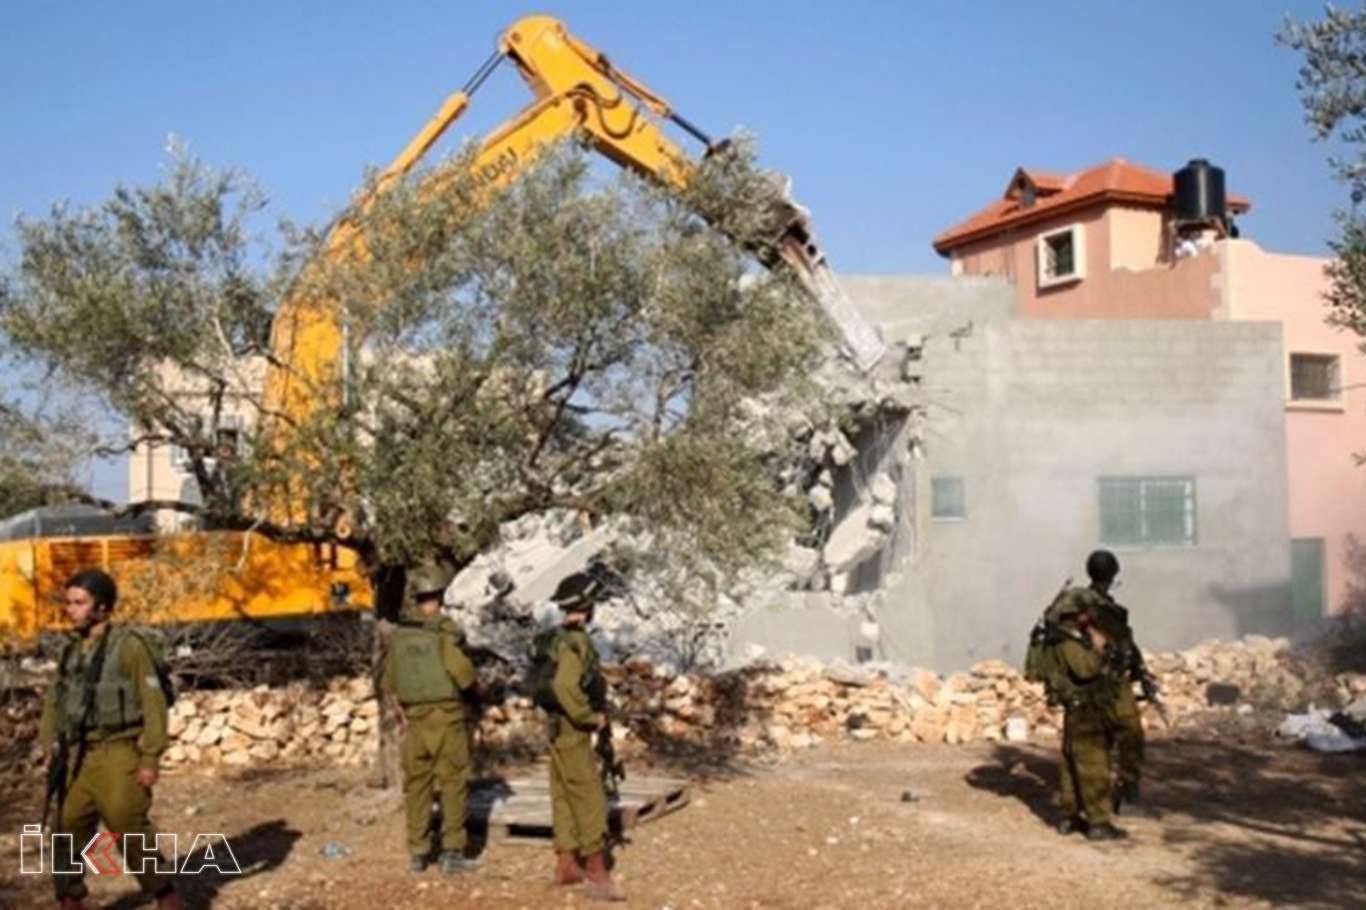 UN: israel should halt demolition of Palestinian homes and property